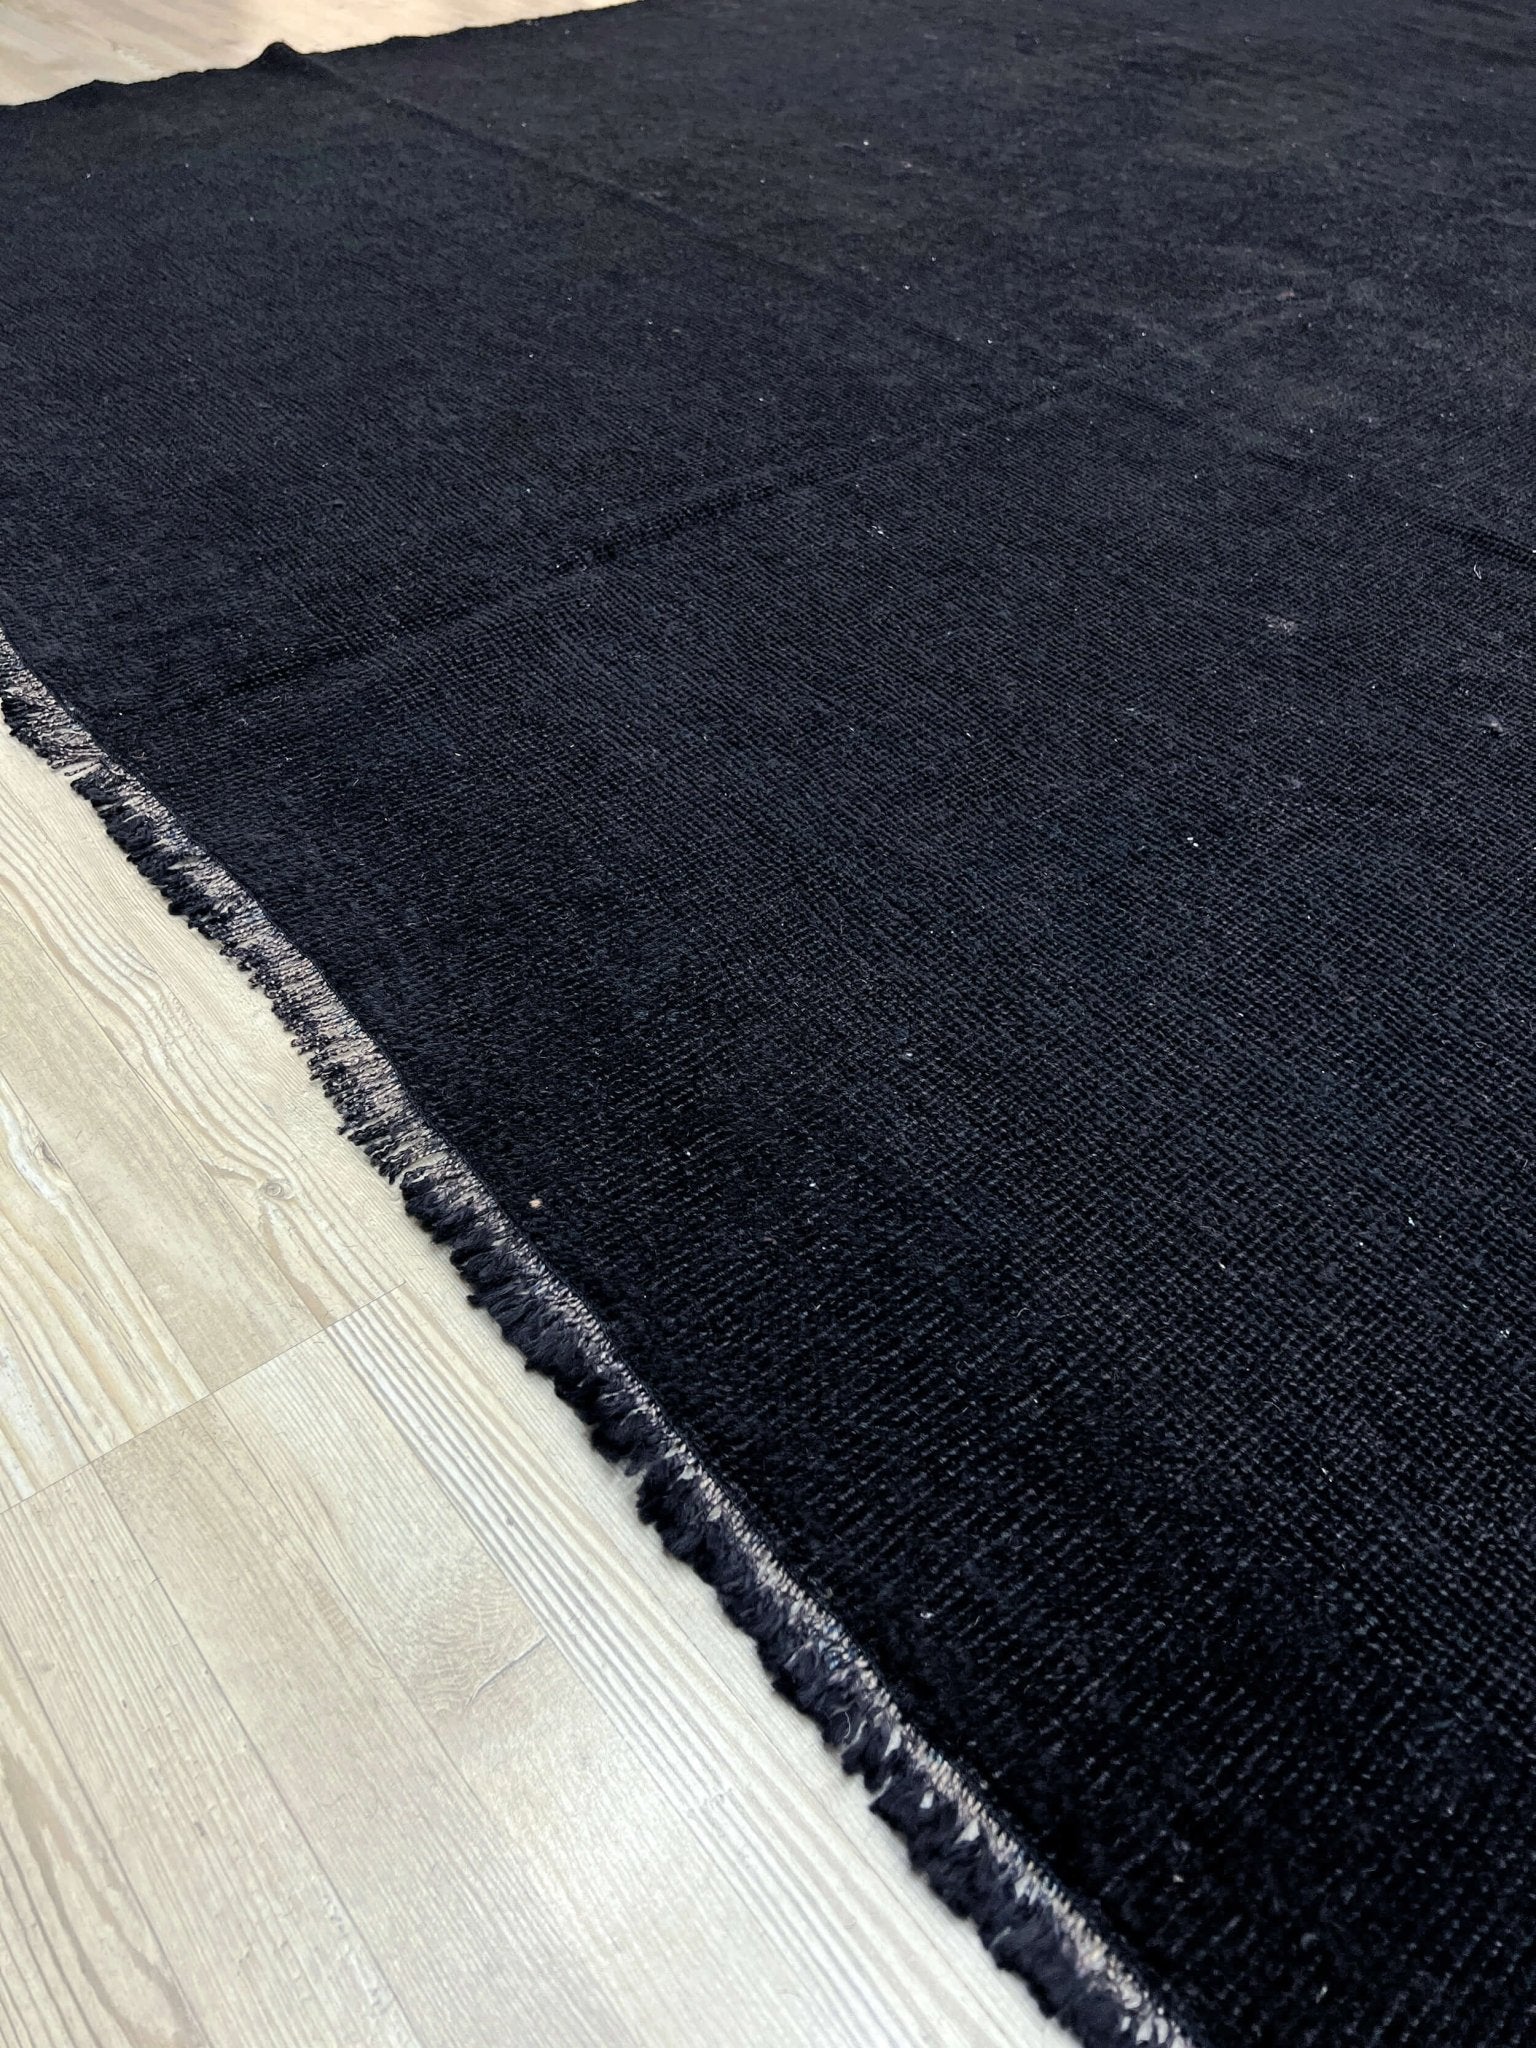 black vintage rug turkish rug shopping rug store palo alto berkeley san francisco bay area